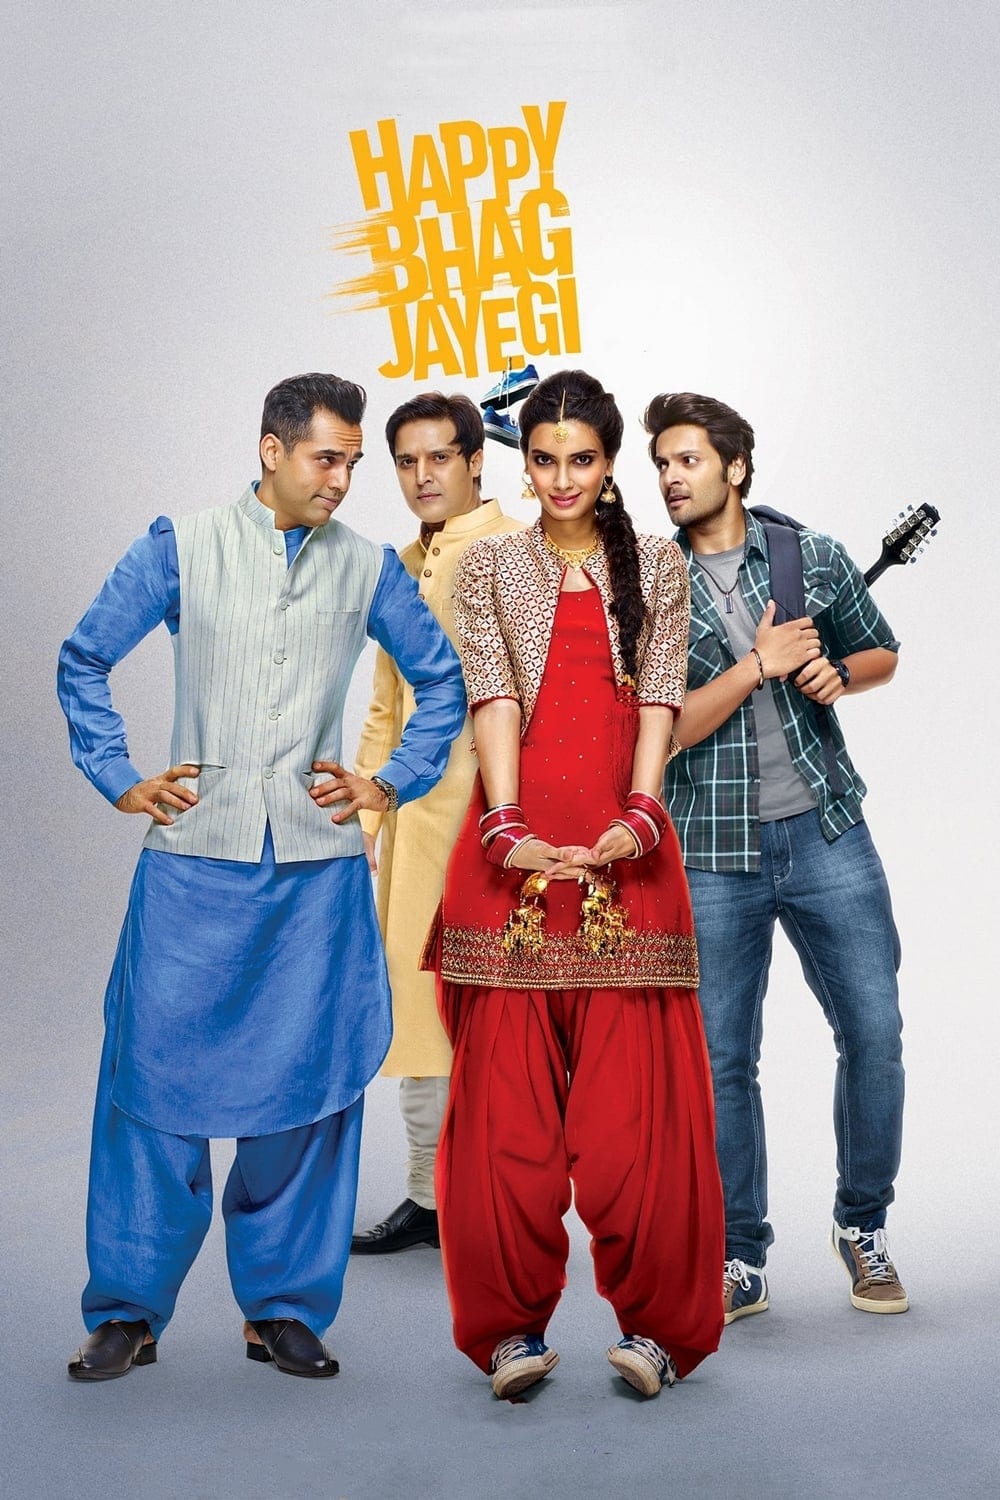 Poster for the movie "Happy Bhag Jayegi"